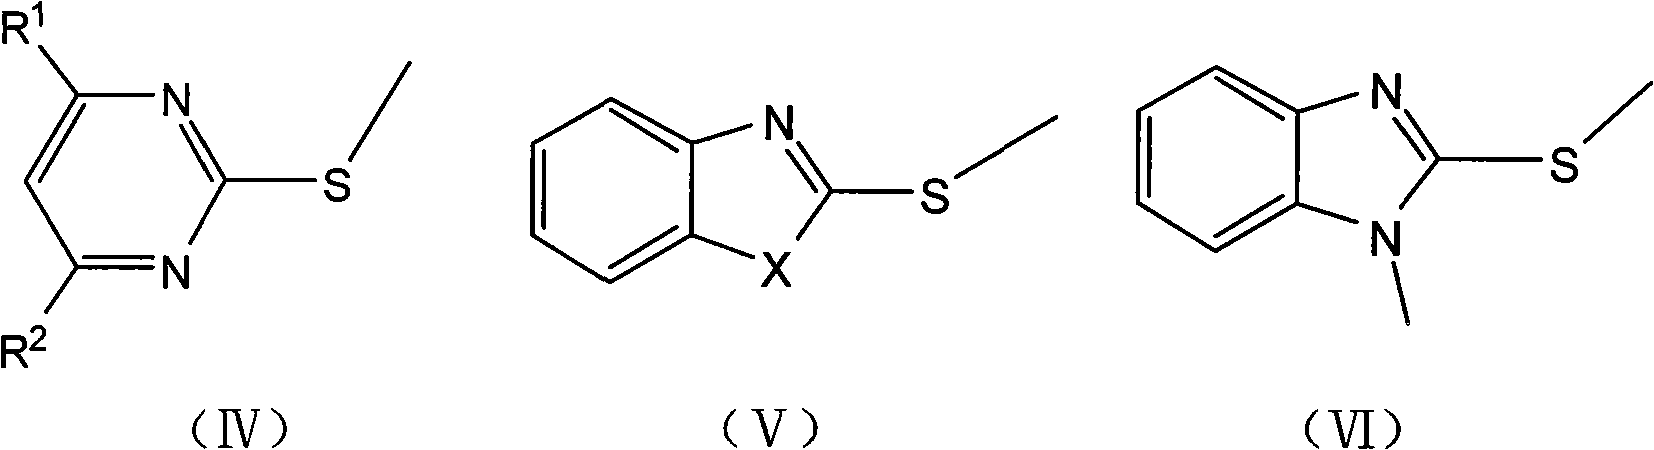 Method for preparing heterocyclic compounds of methyl mercapto under ionic liquid catalysis